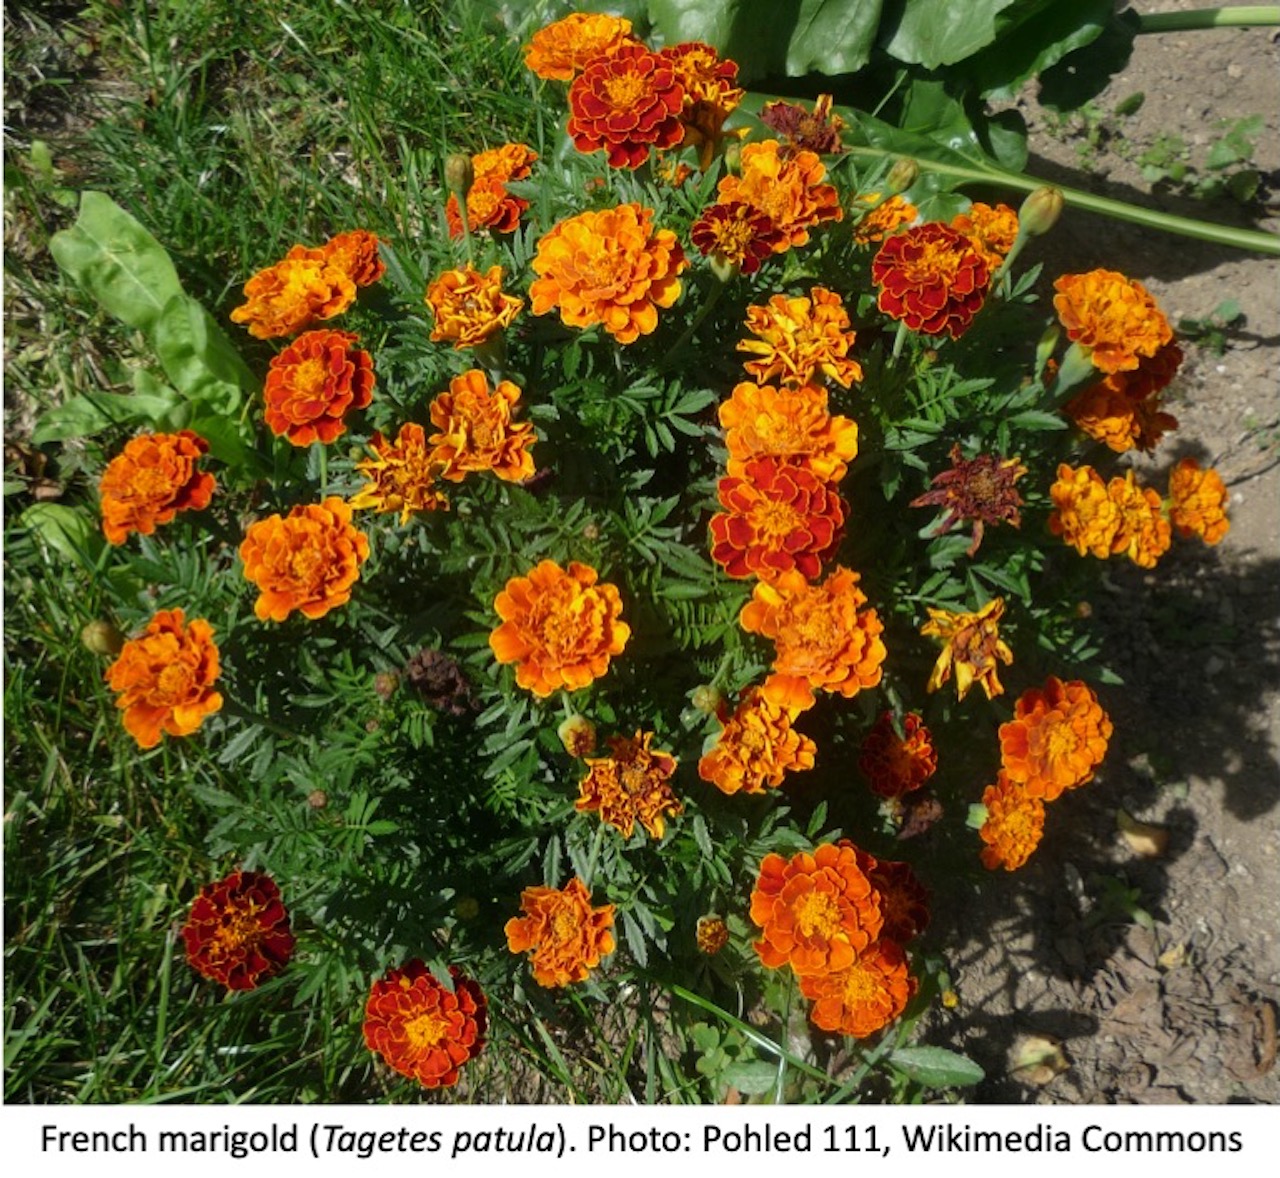 French marigold with orange flowers